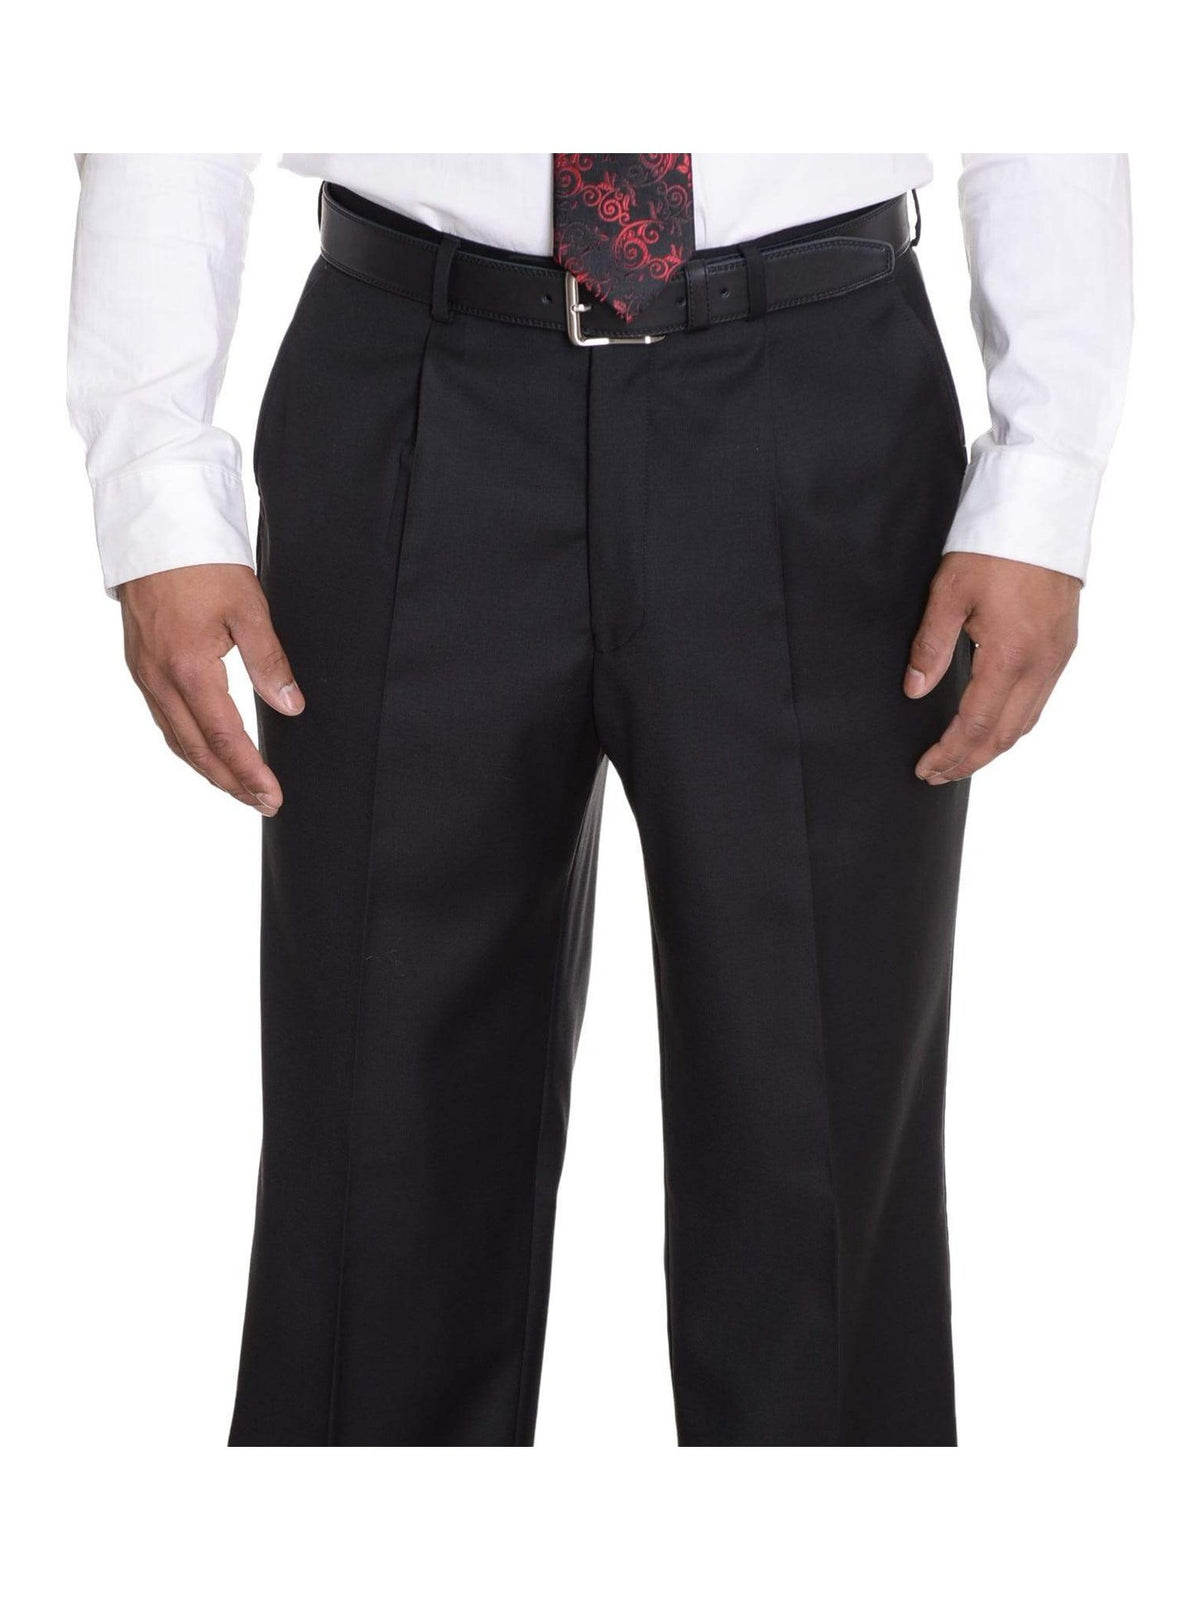 Label M PANTS Solid Black Single Pleated Wrinkle Resistant Wool Dress Pants